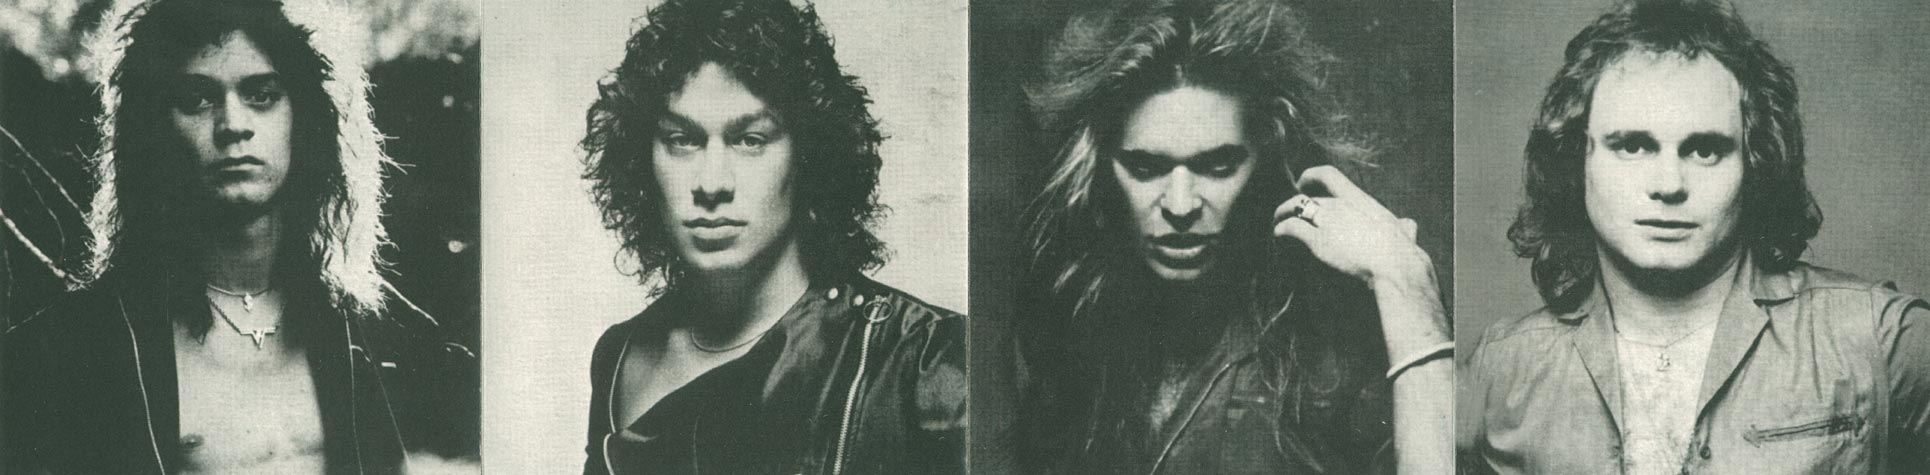 Rock Lyrics: Van Halen: Woman and Children First lyrics